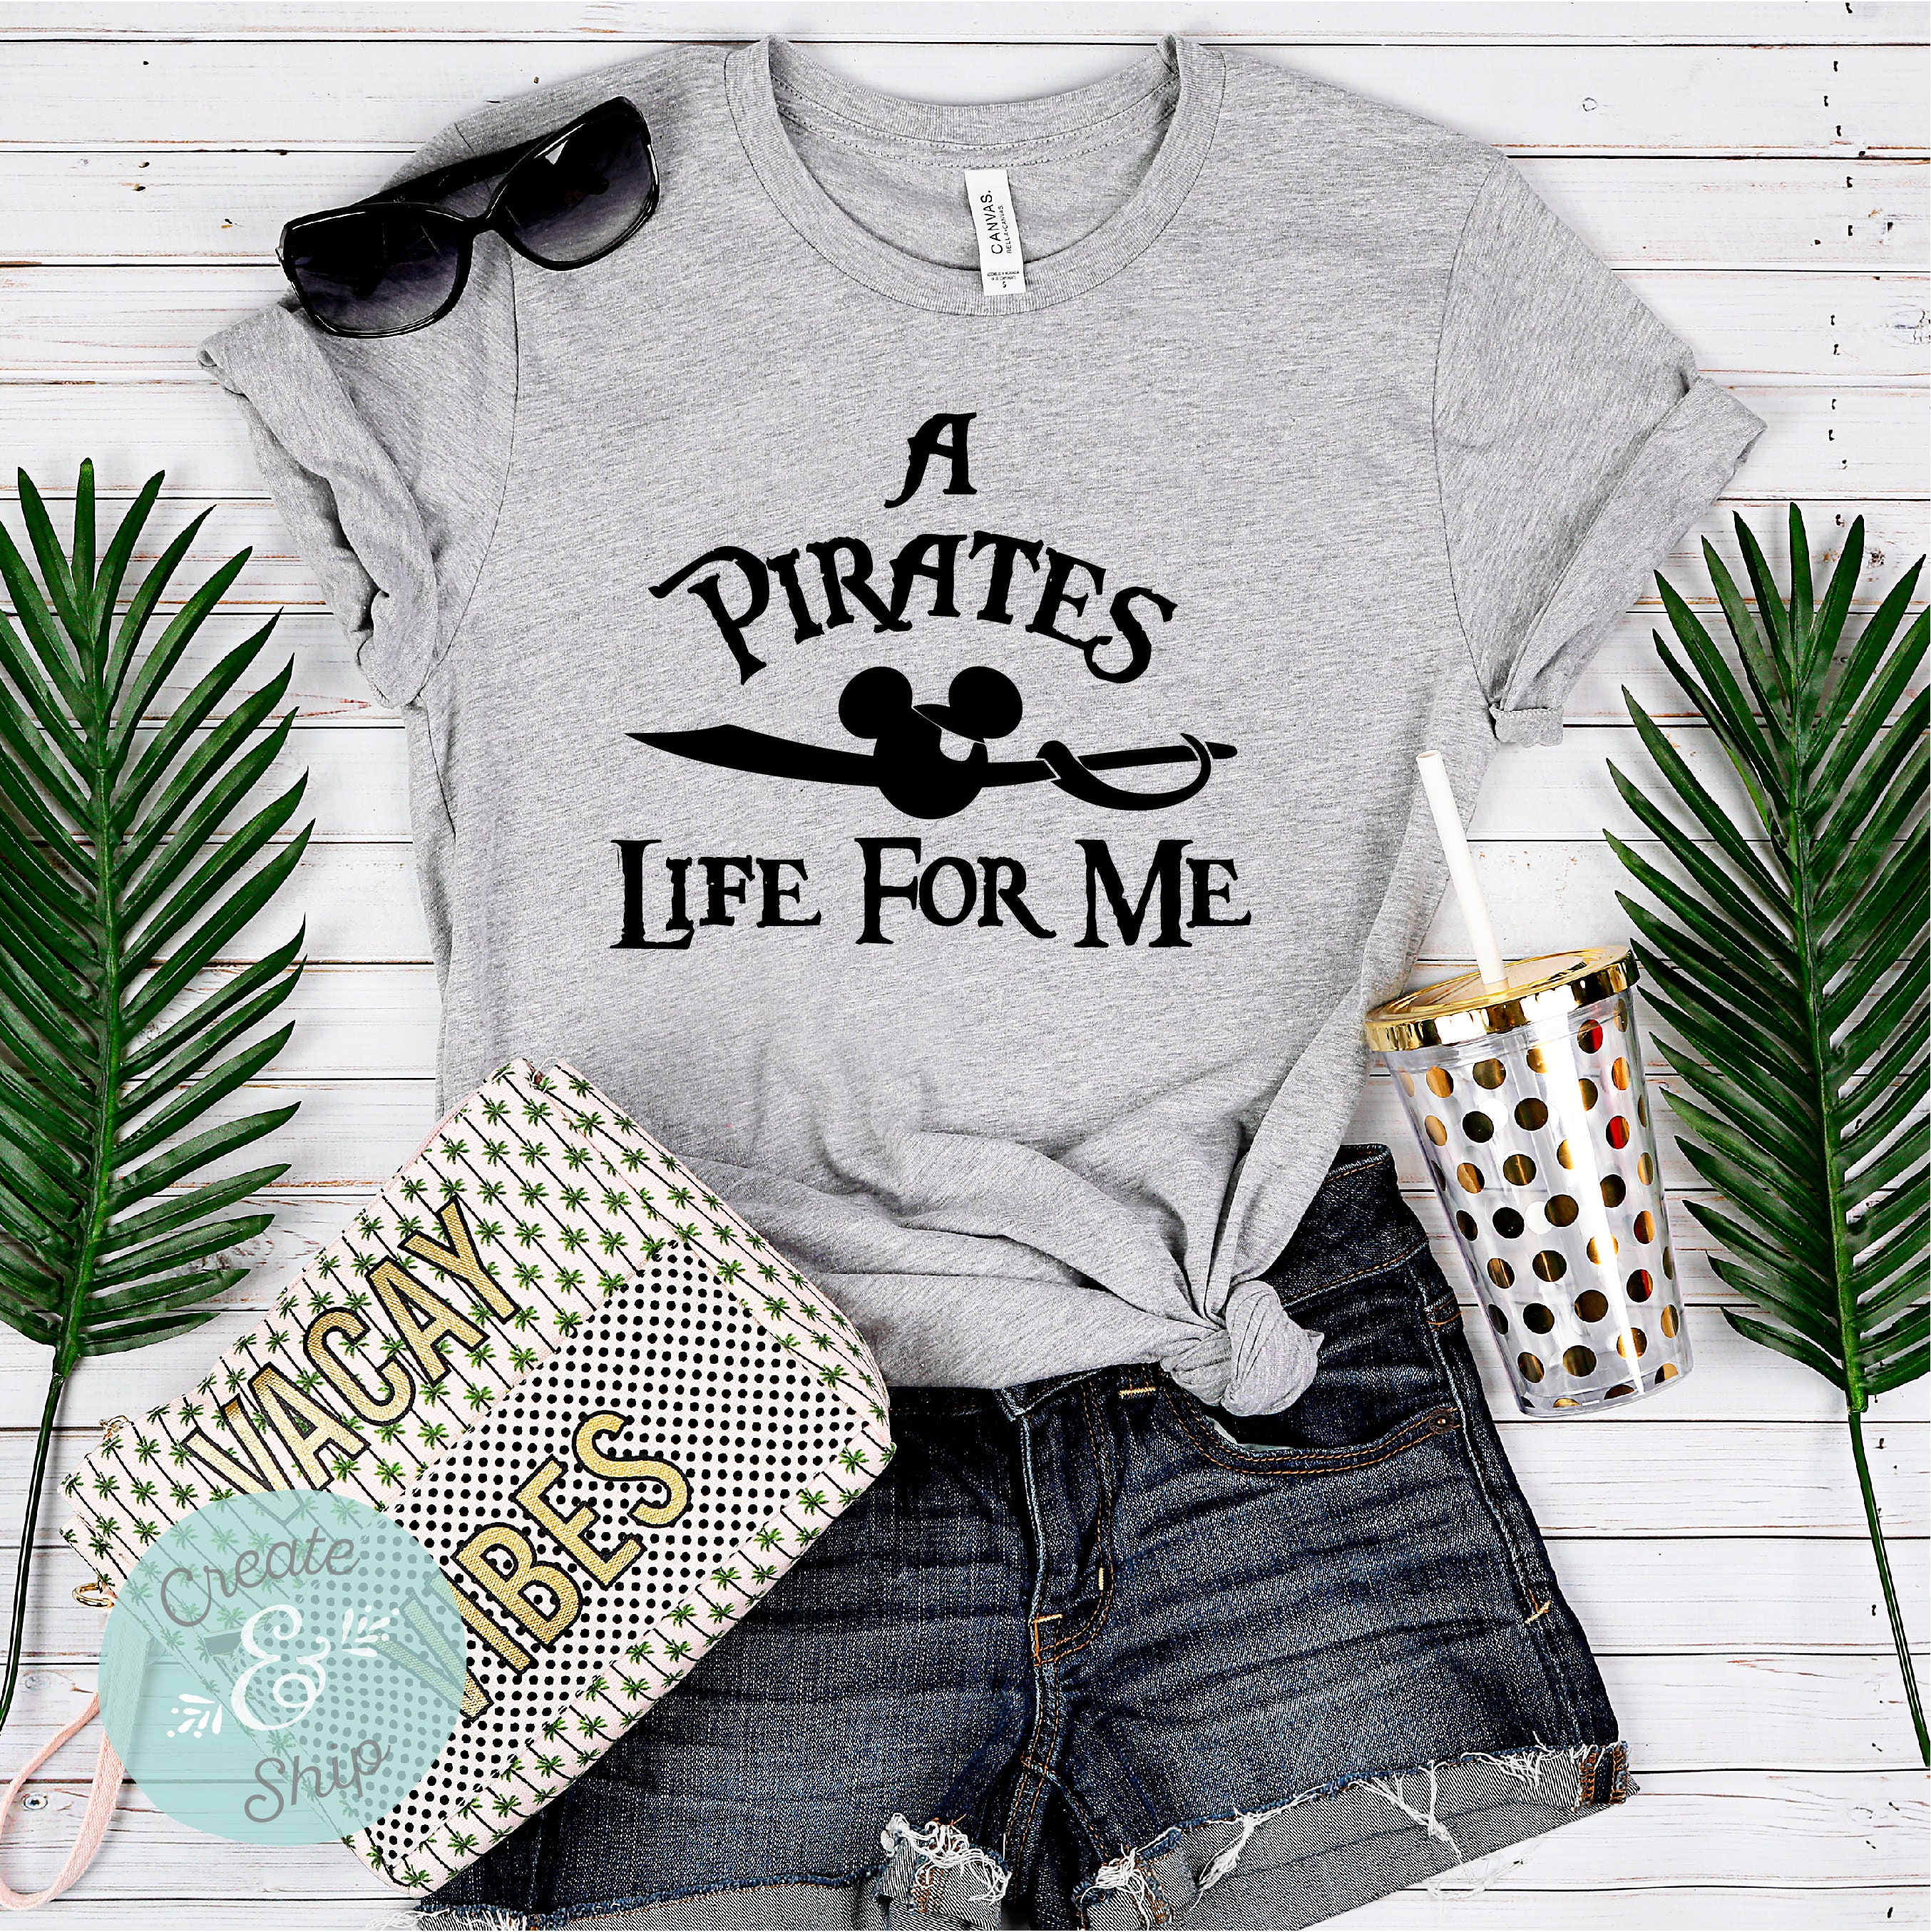 Discover A Pirates Life For Me Shirt, Disneyland Shirt, Pirates Of The Caribbean Shirt, Kids Disney Shirt, Disney Shirts